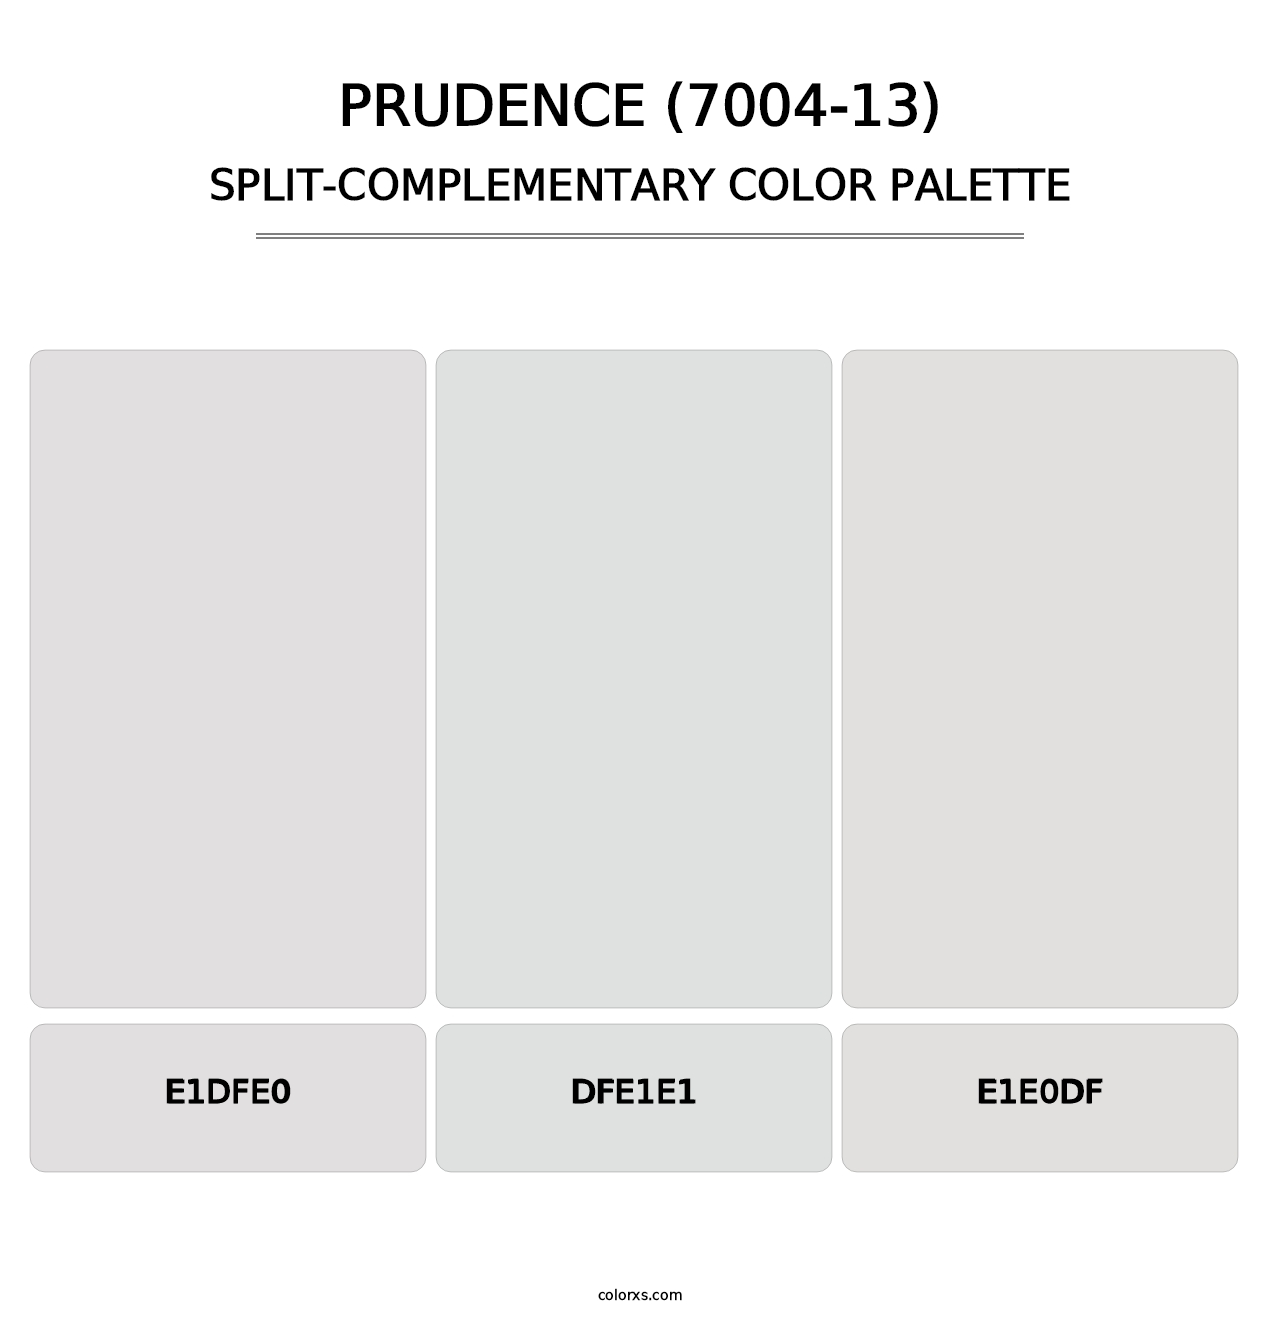 Prudence (7004-13) - Split-Complementary Color Palette